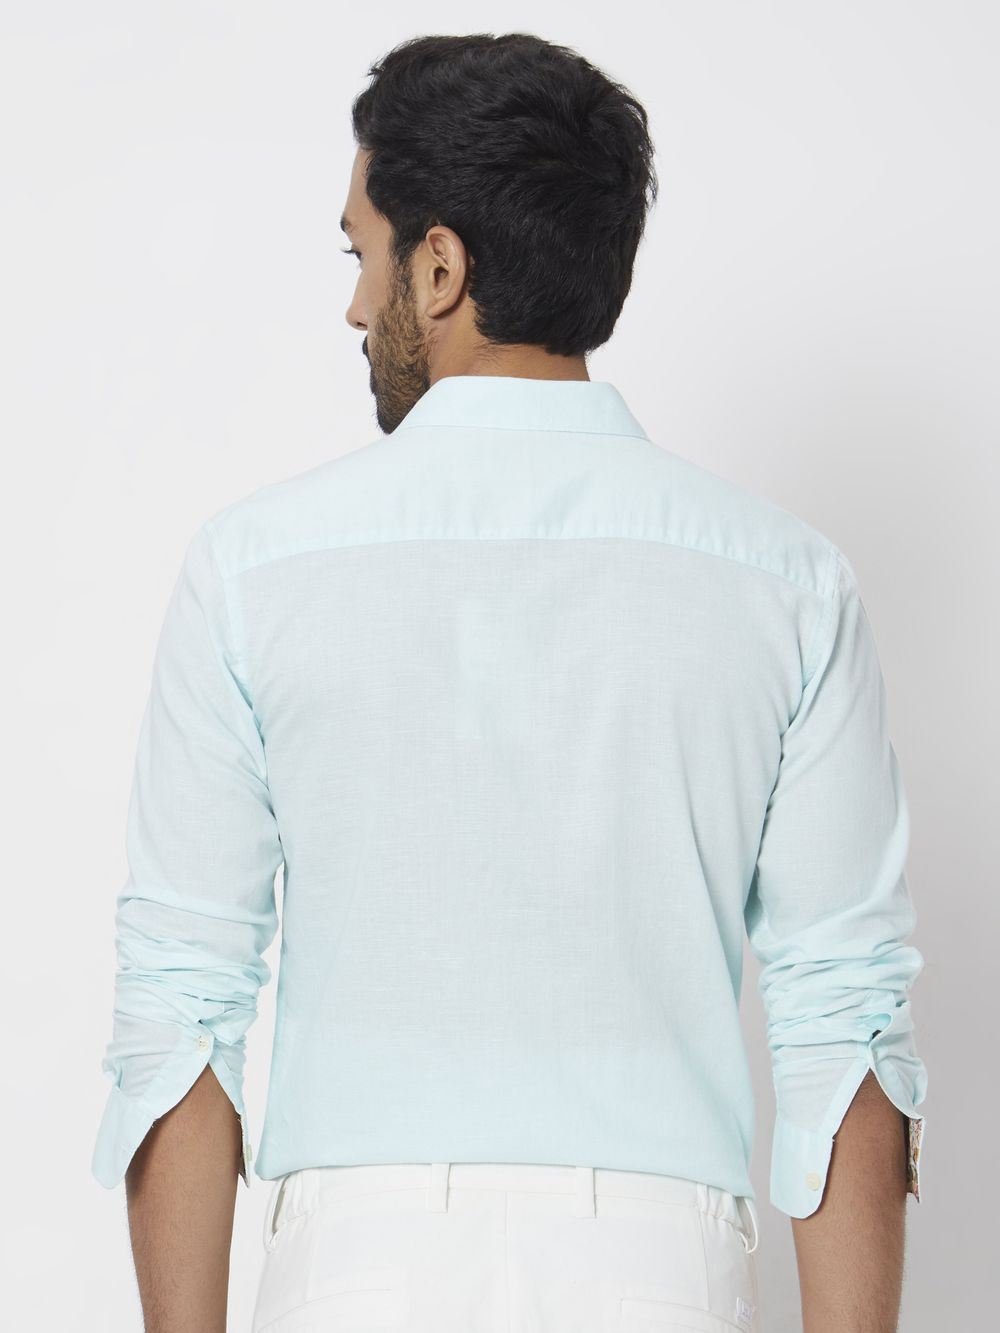 Turquoise Cotton Linen Slim Fit Casual Shirt